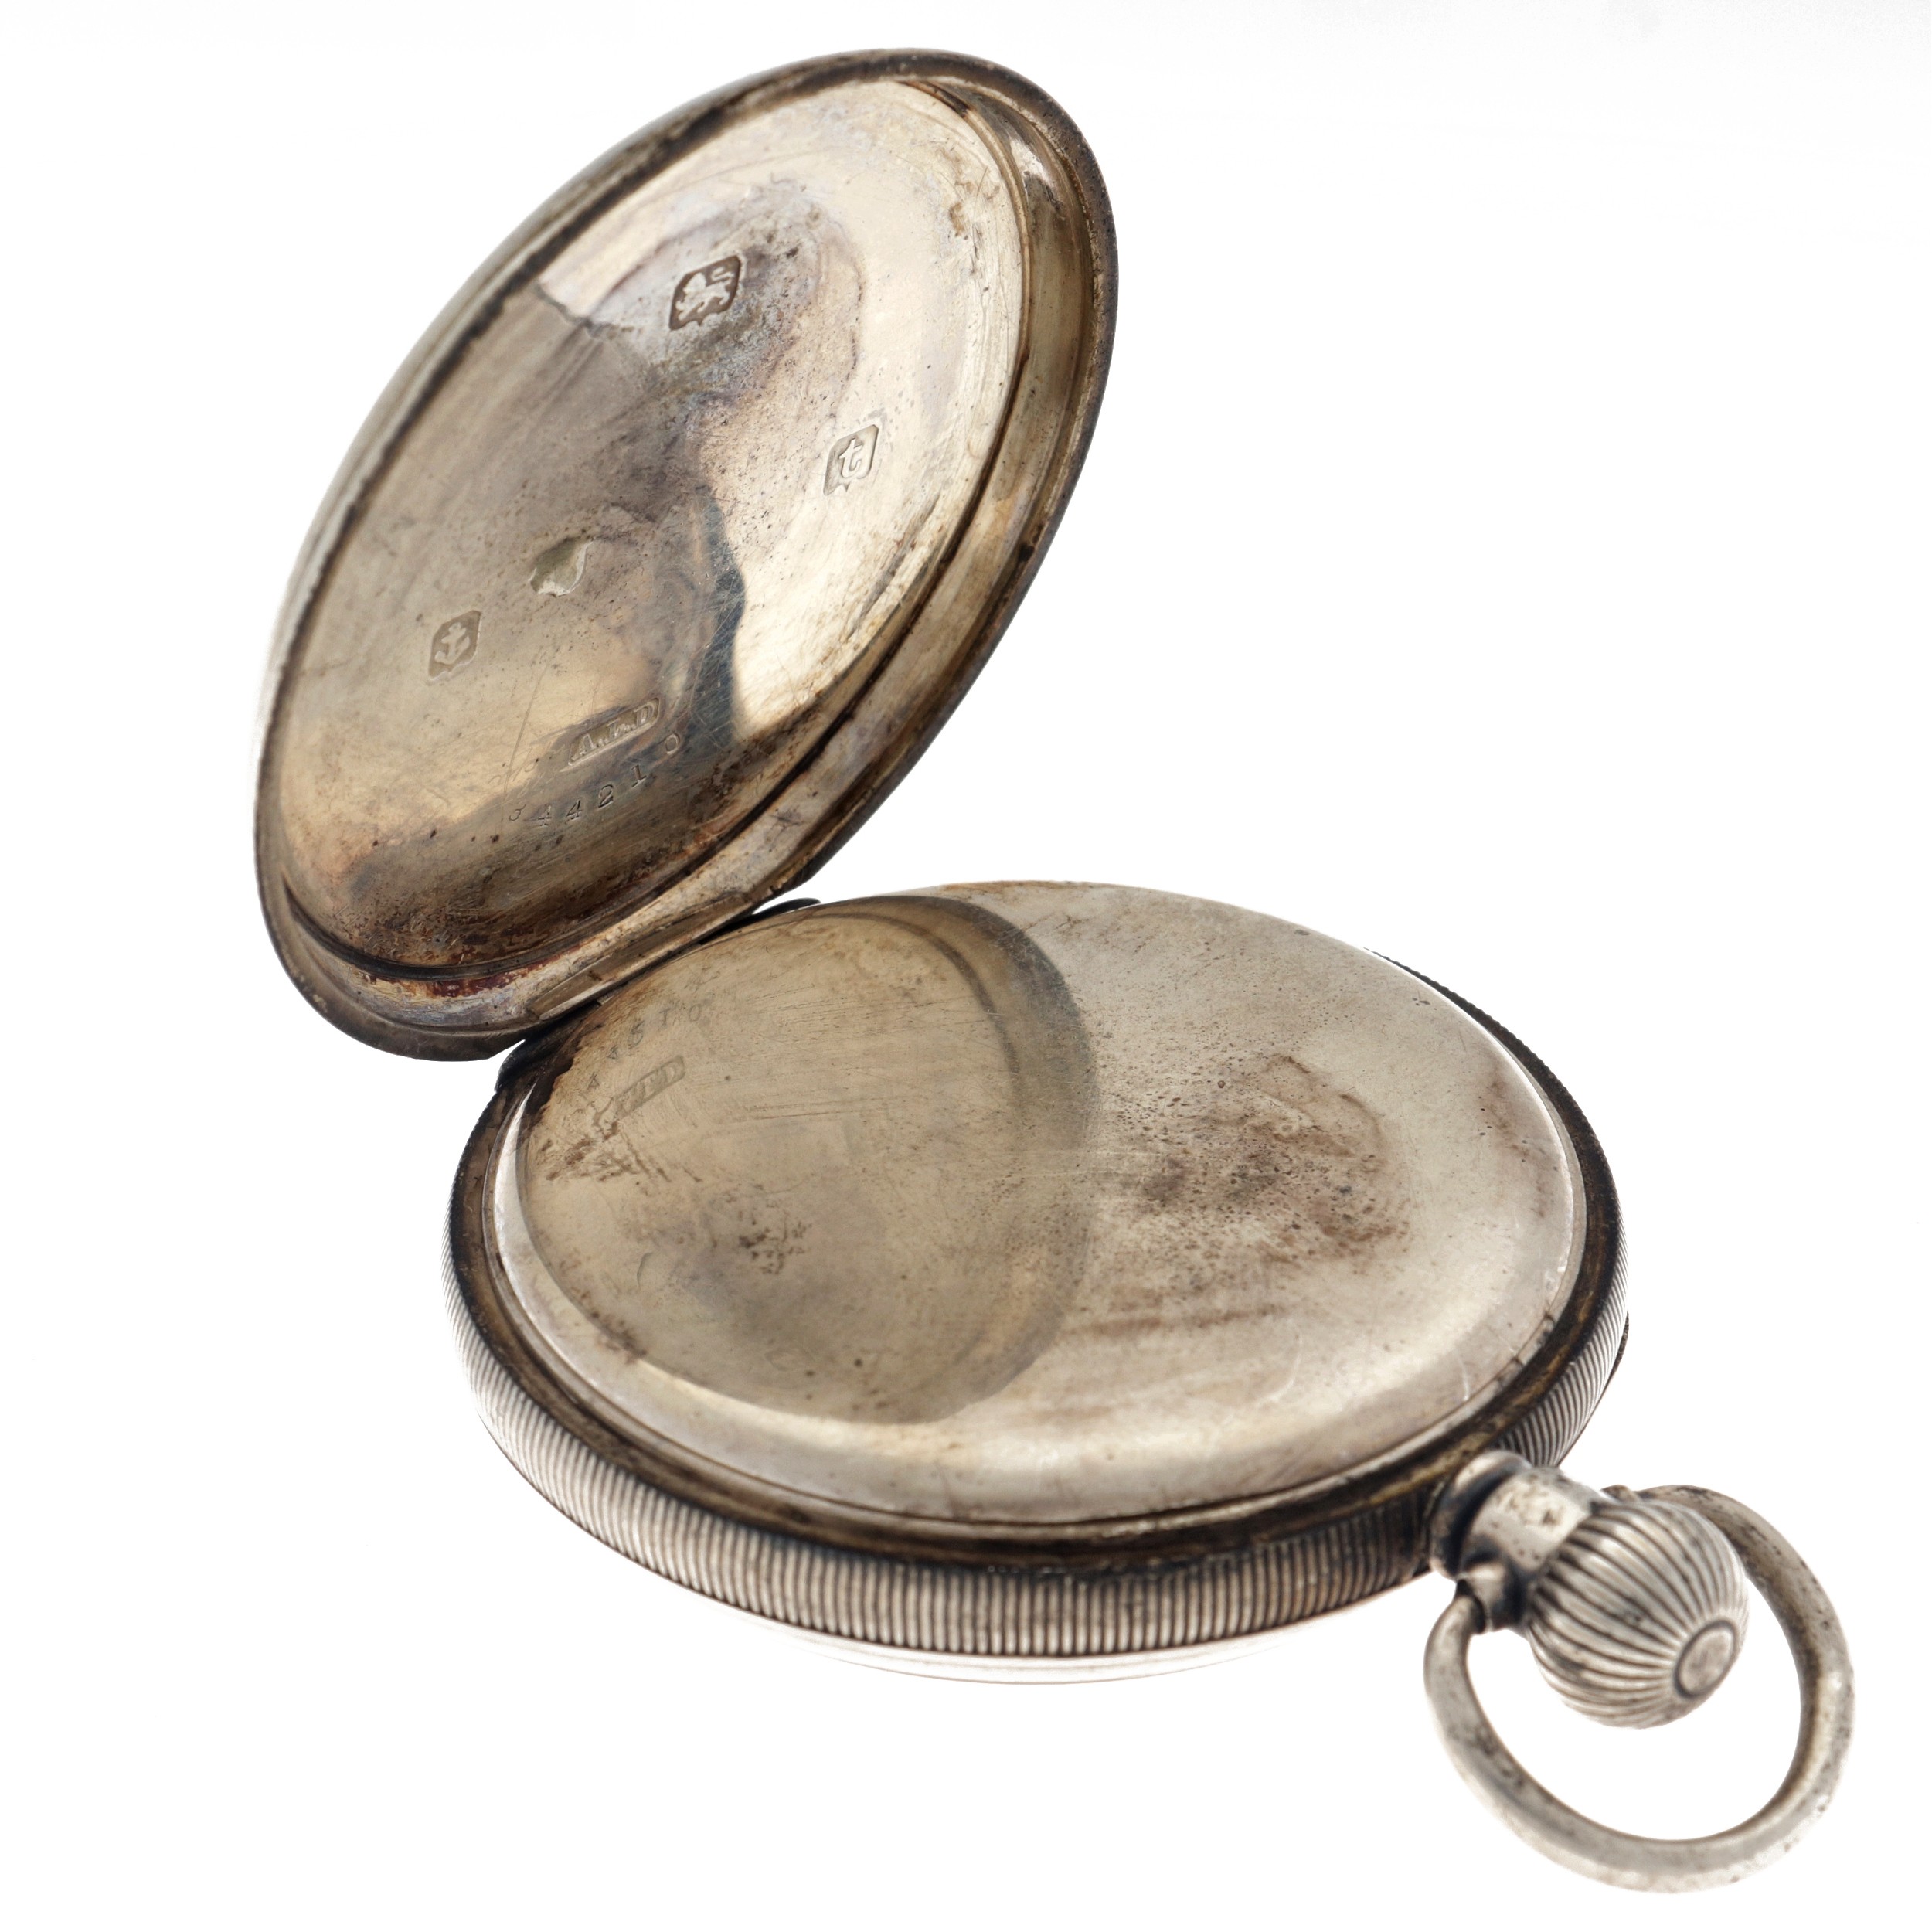 No Reserve - Waltham U.S.A. silver pocketwatch (925/1000) - Men's pocketwatch - approx. 1918. - Image 4 of 7